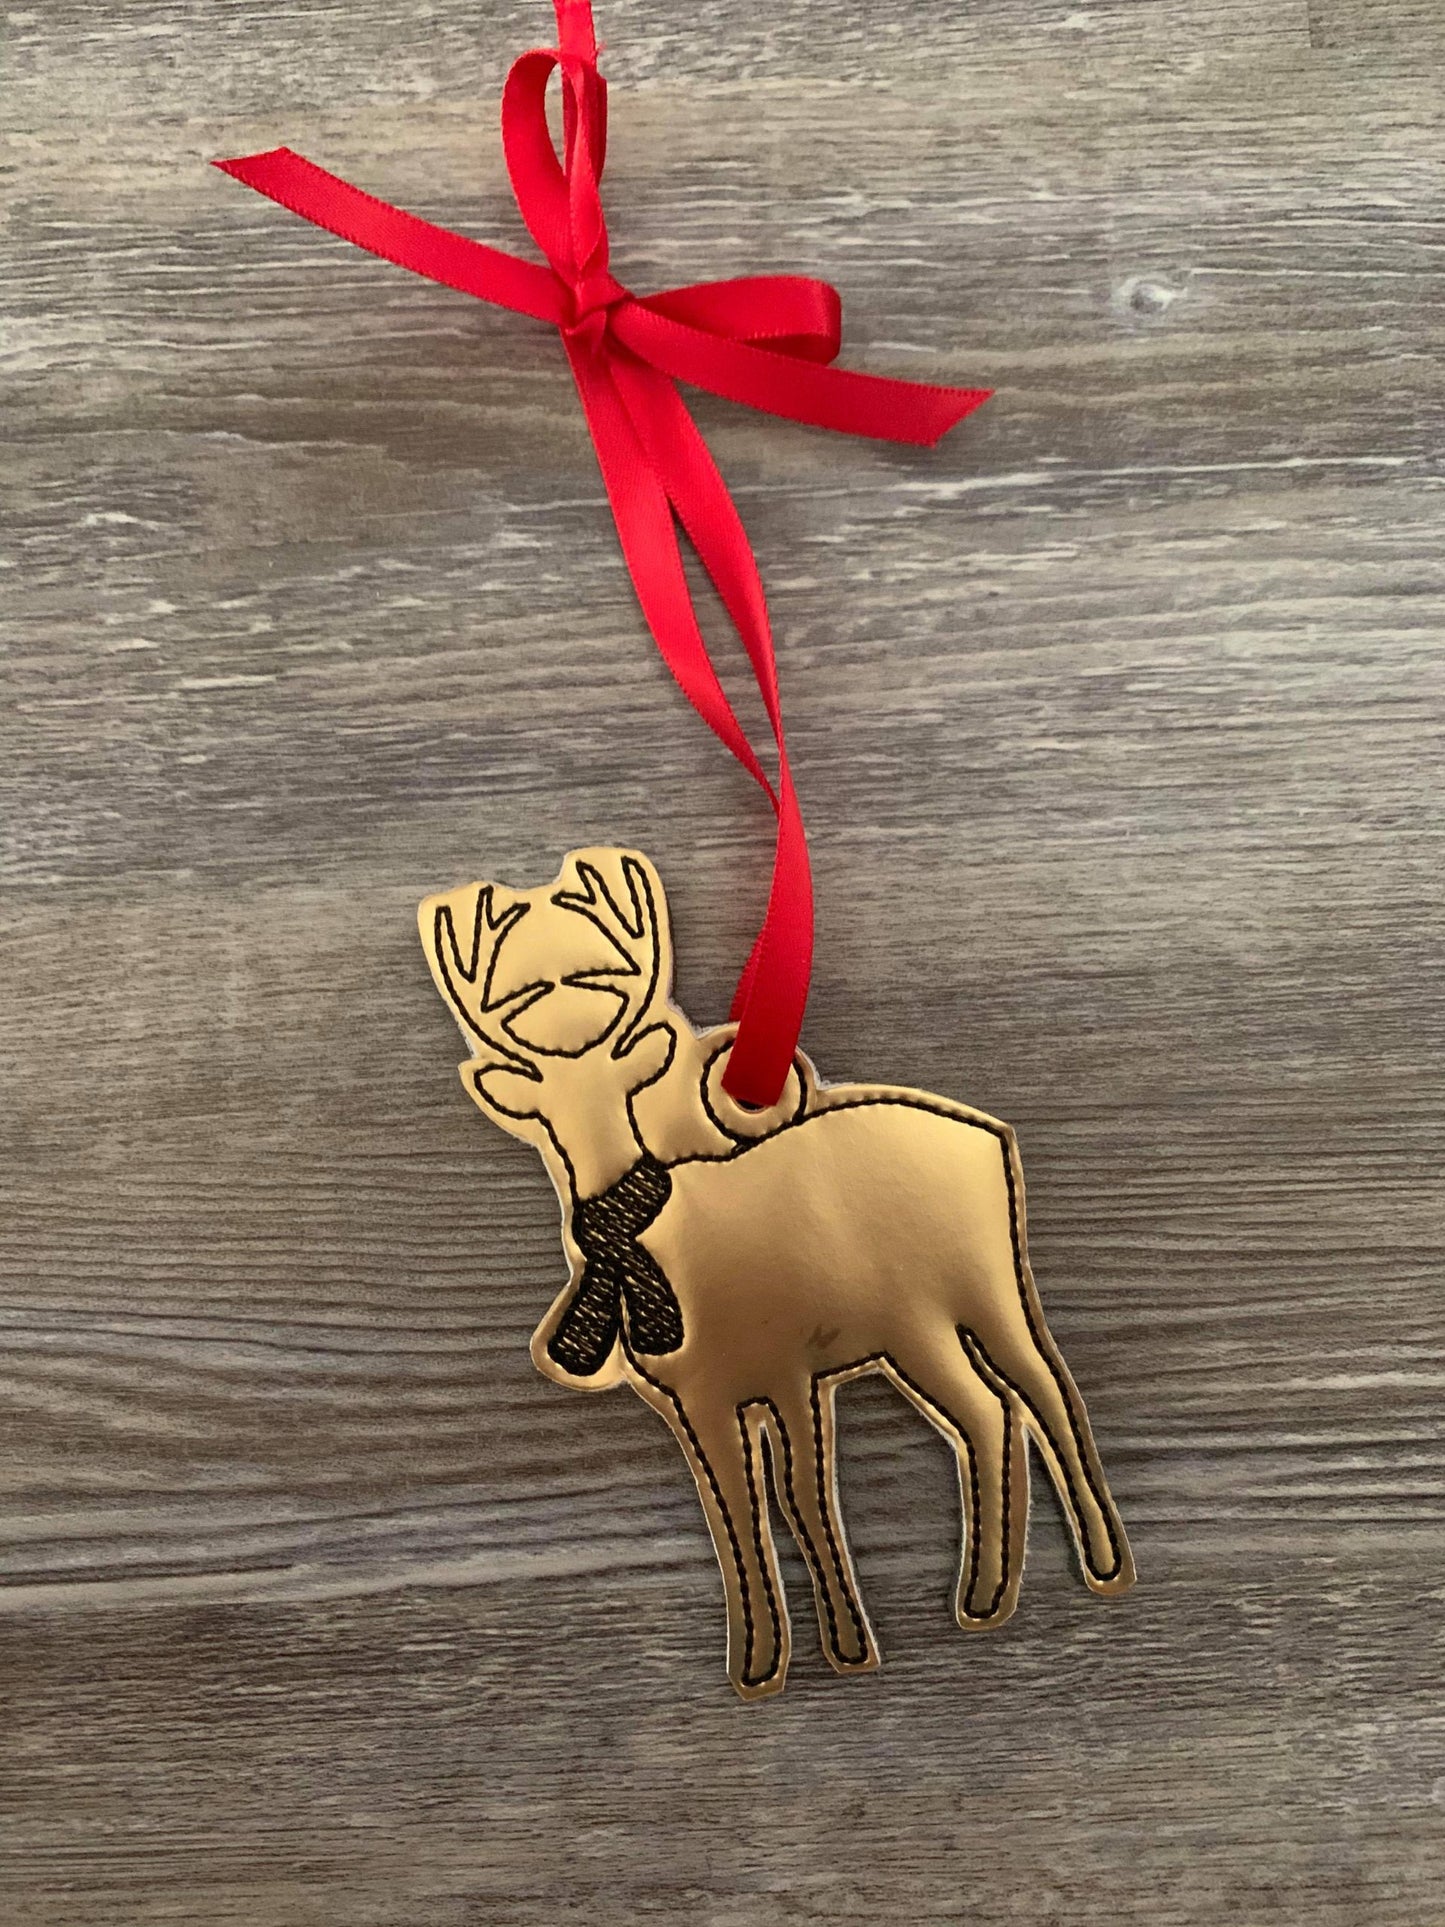 Farmhouse Deer Ornament - Digital Embroidery Design